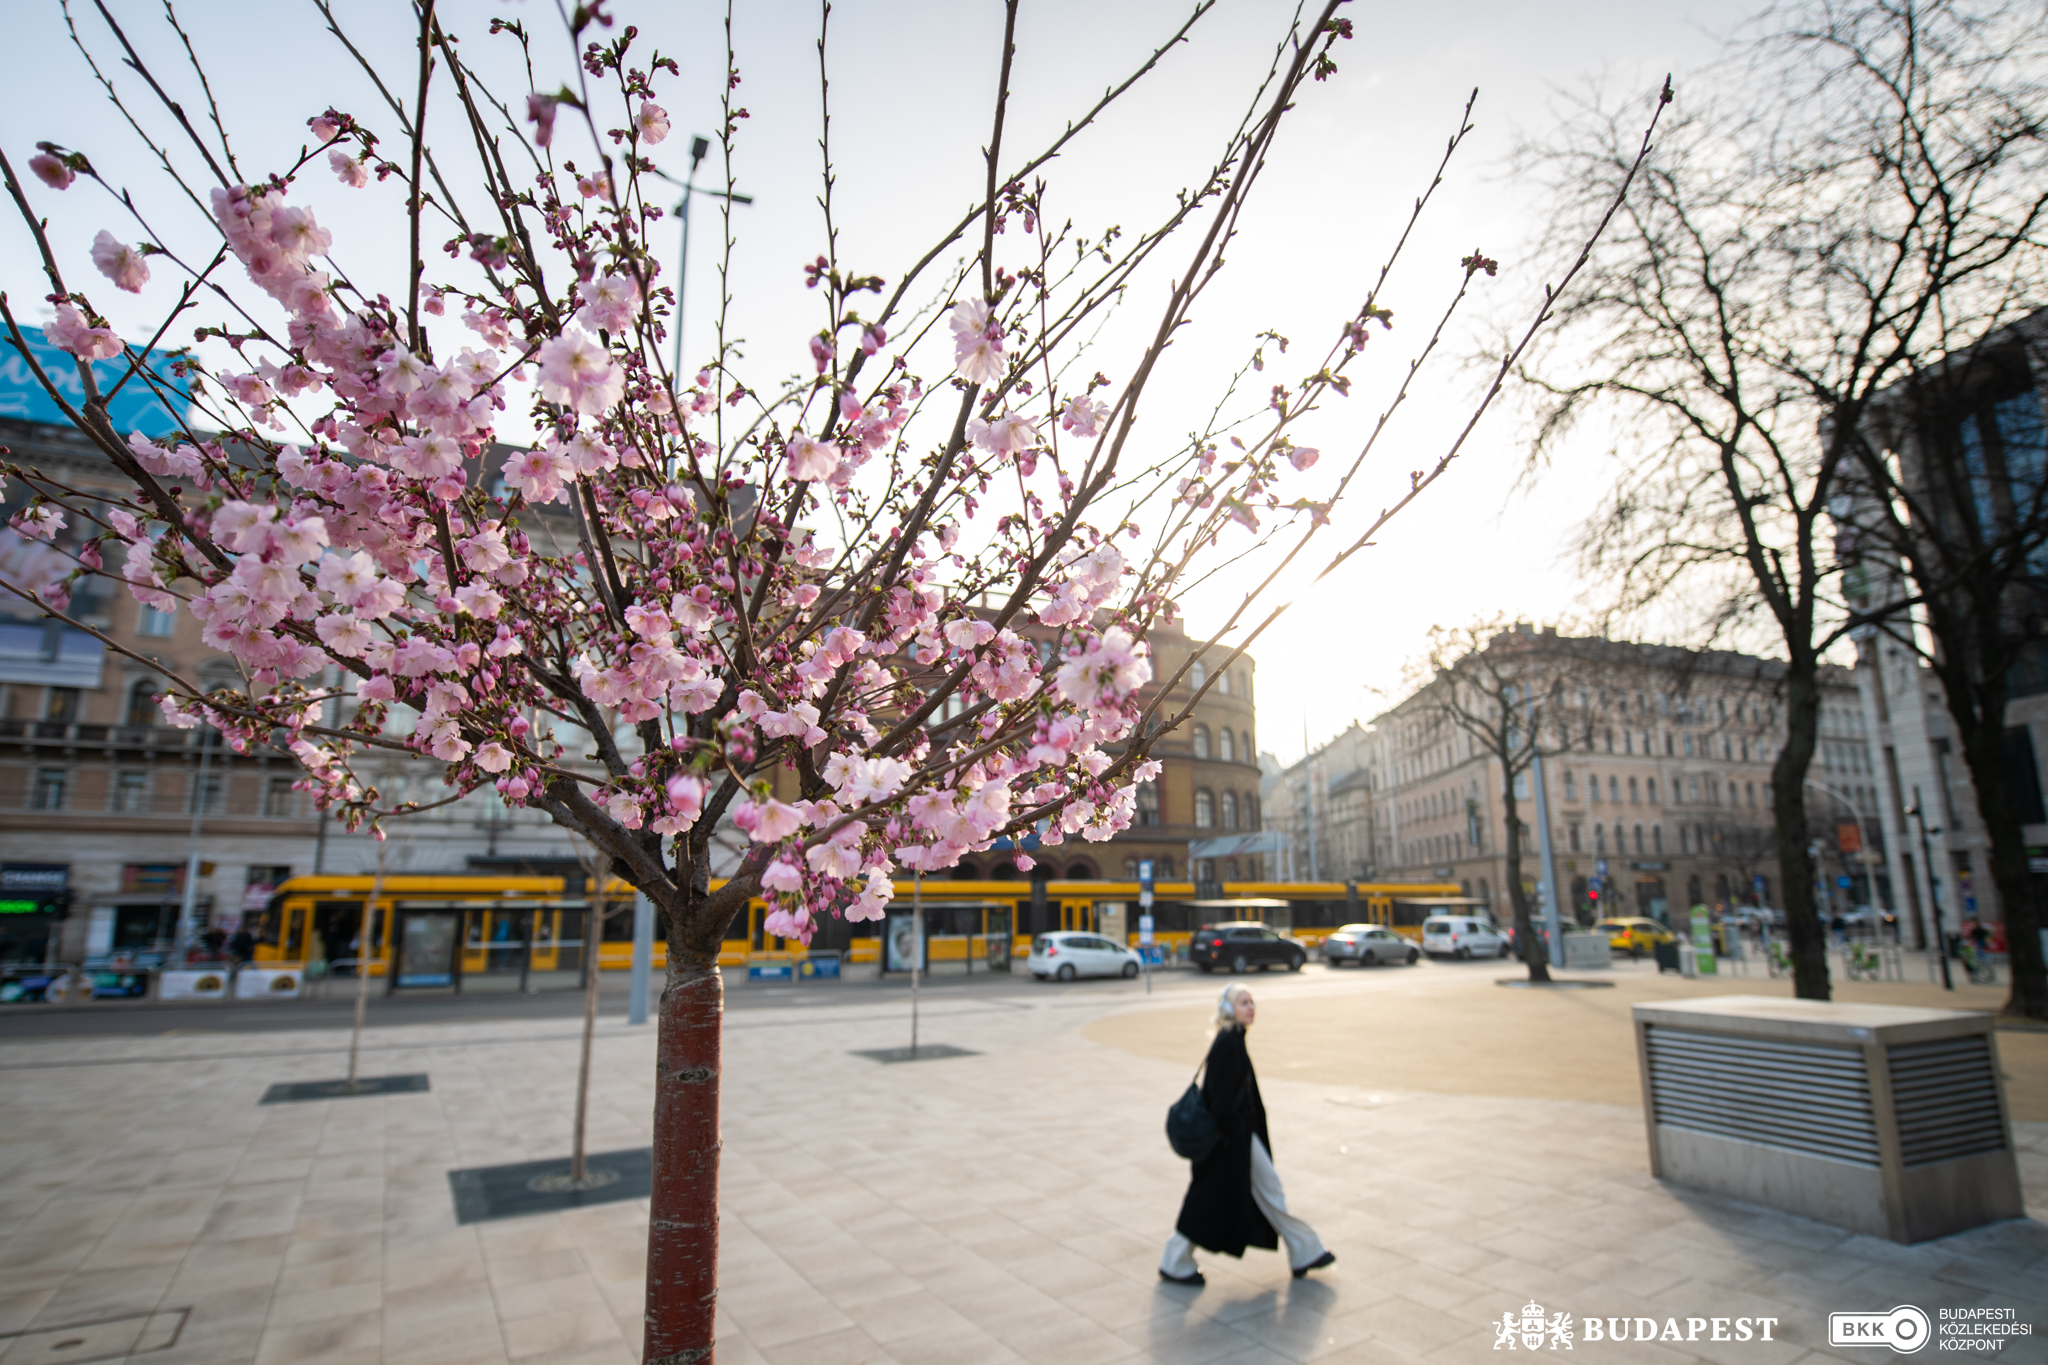 Spring arrived in Budapest